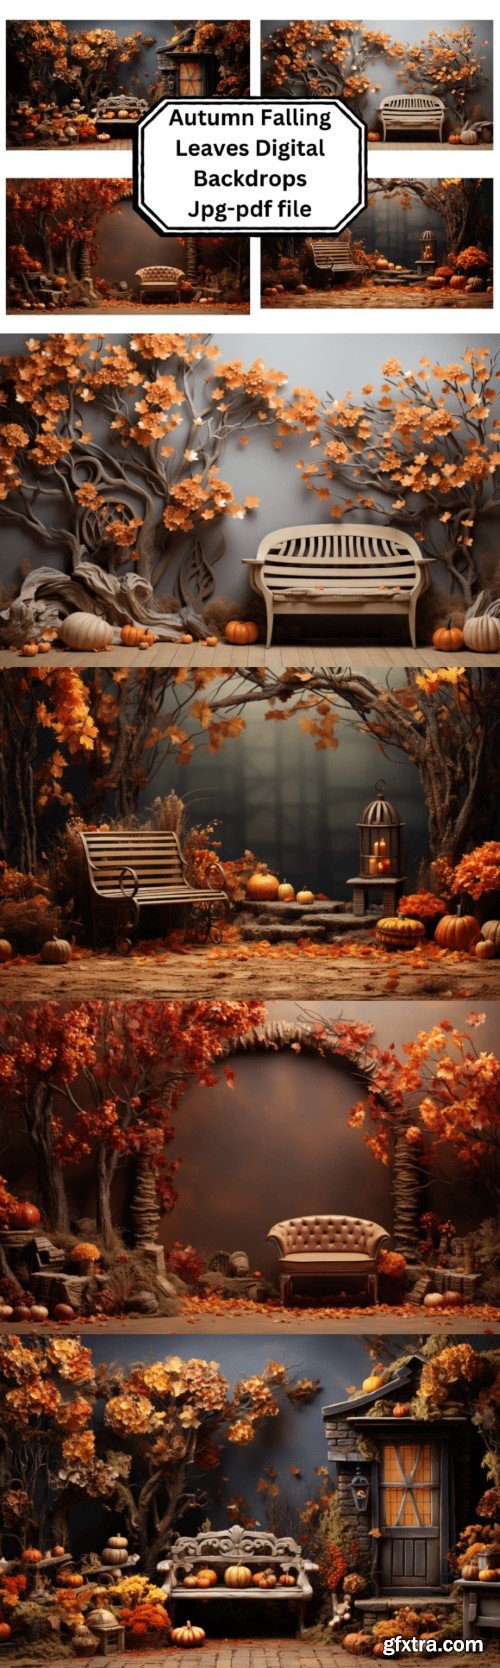 Autumn Falling Leaves Digital Backdrops